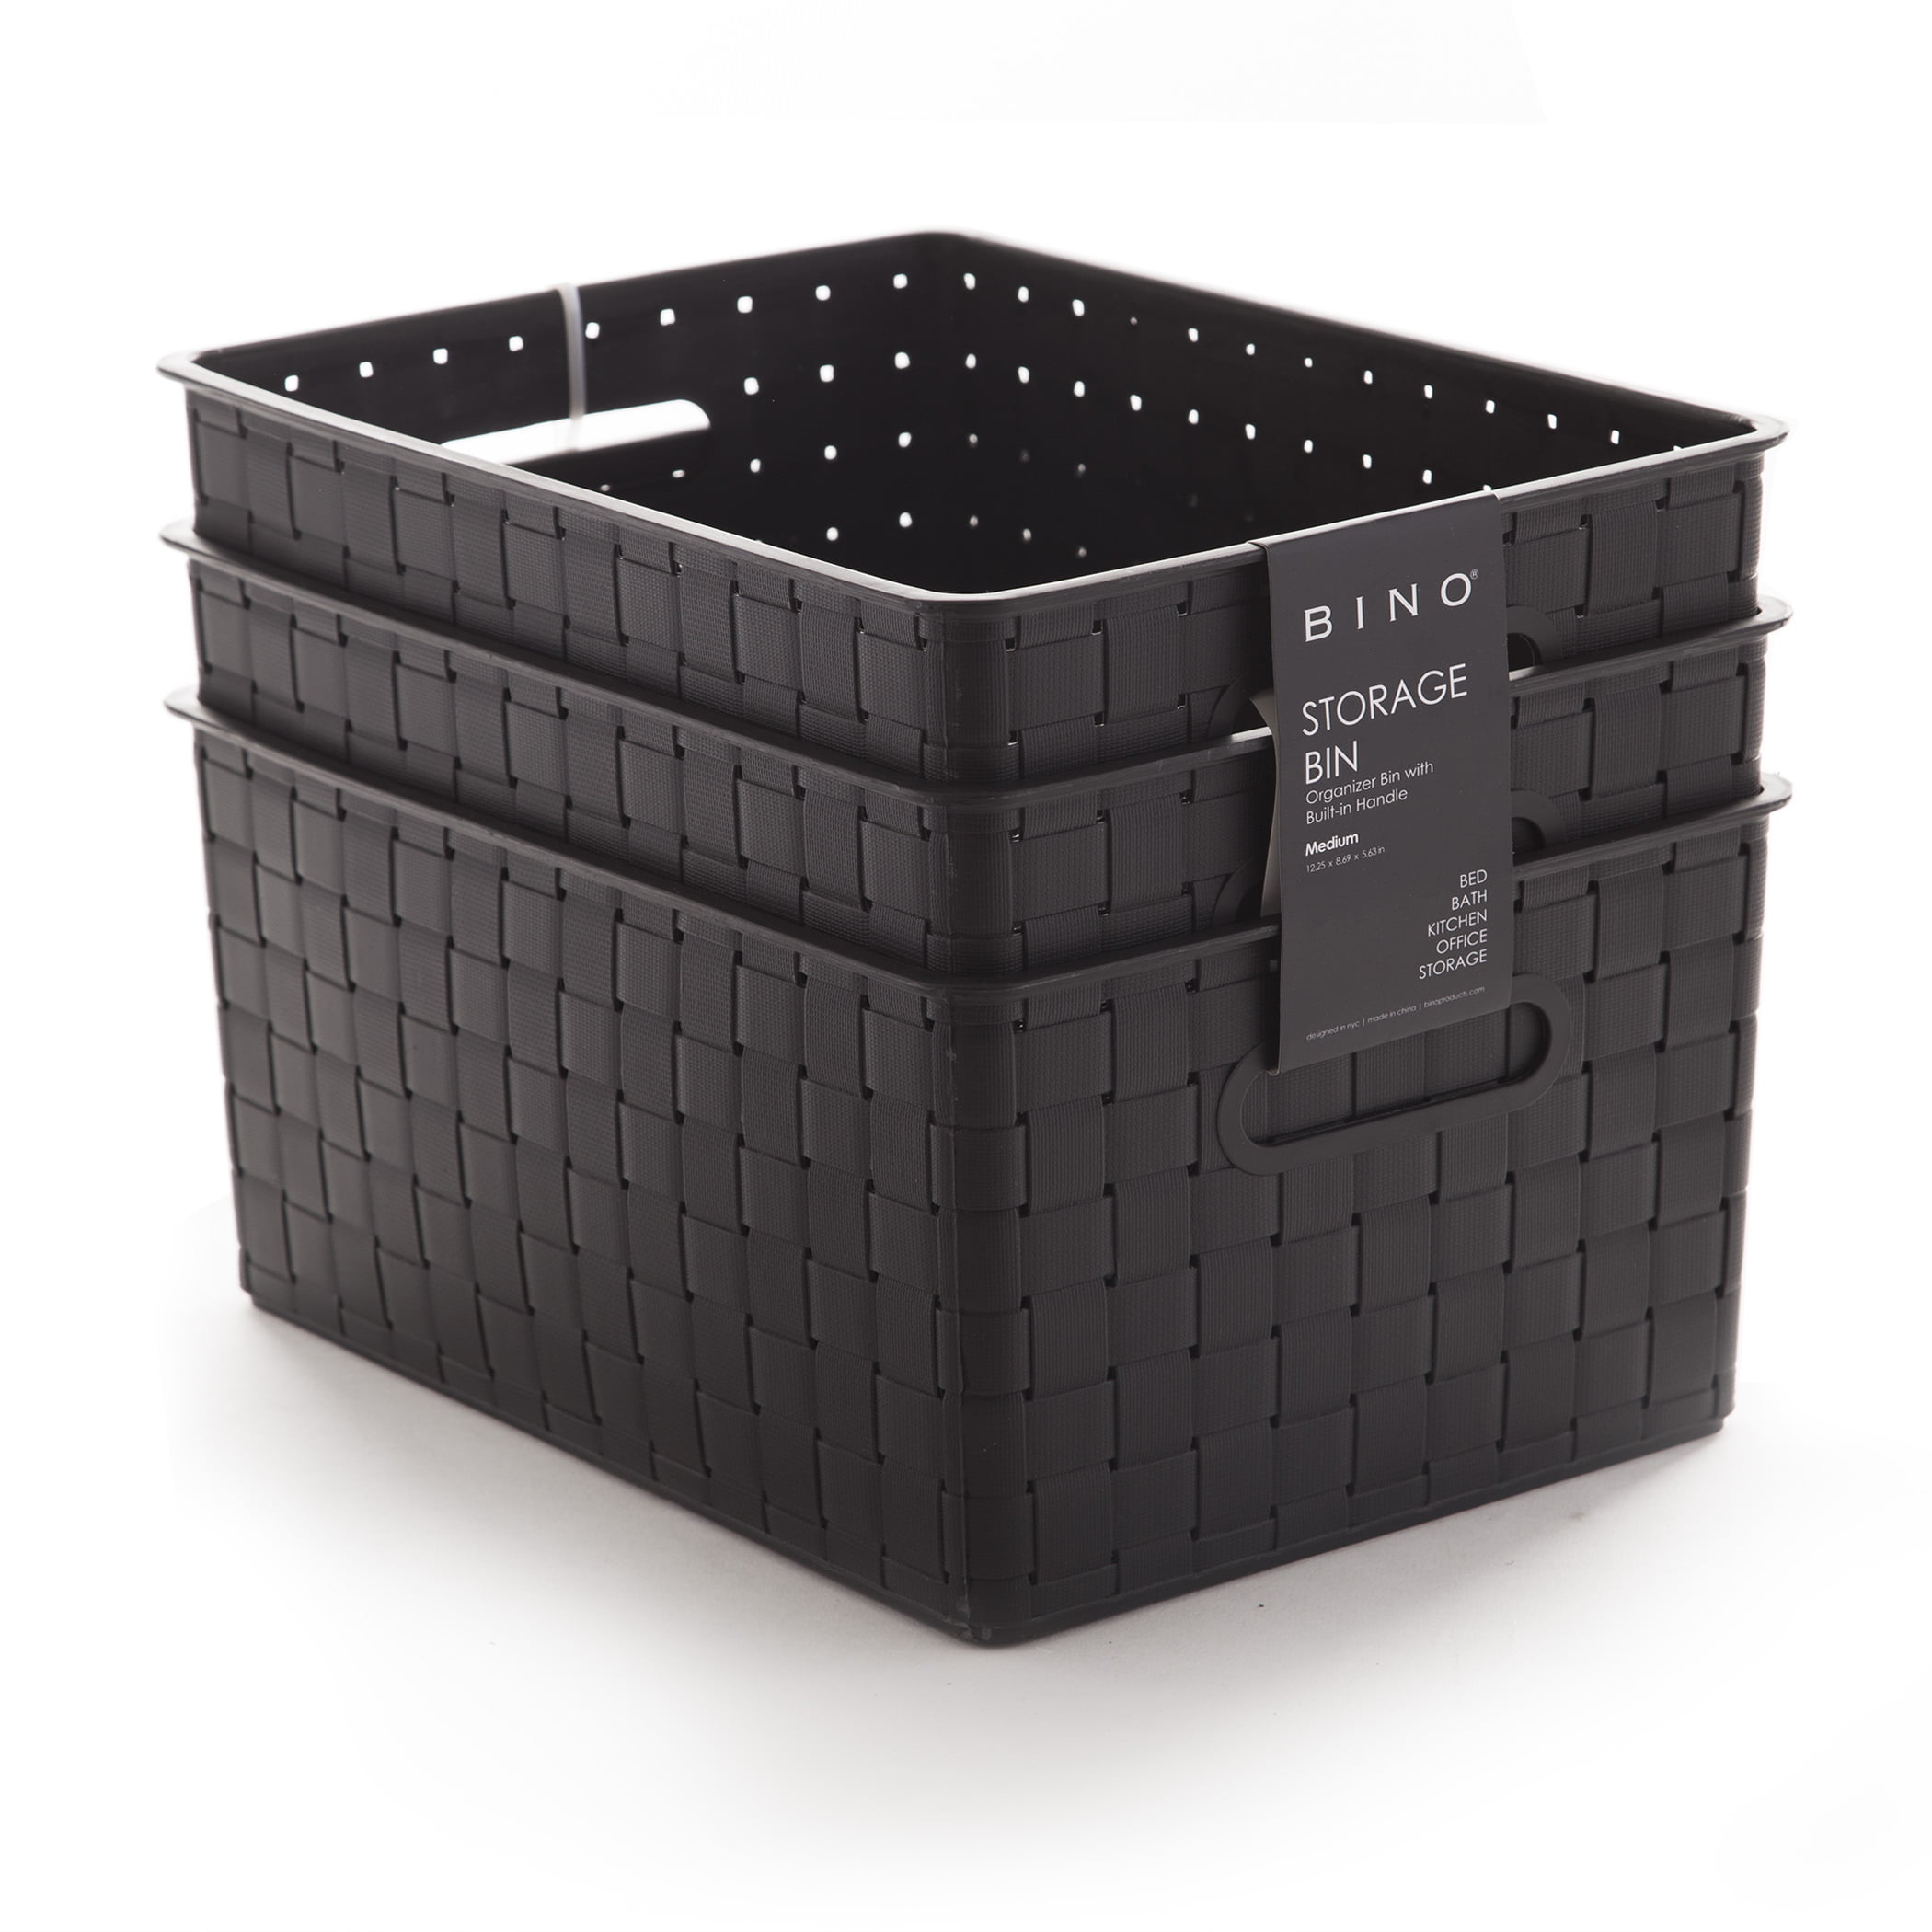 BINO Woven Plastic Storage Basket, Medium 3 PACK (Black